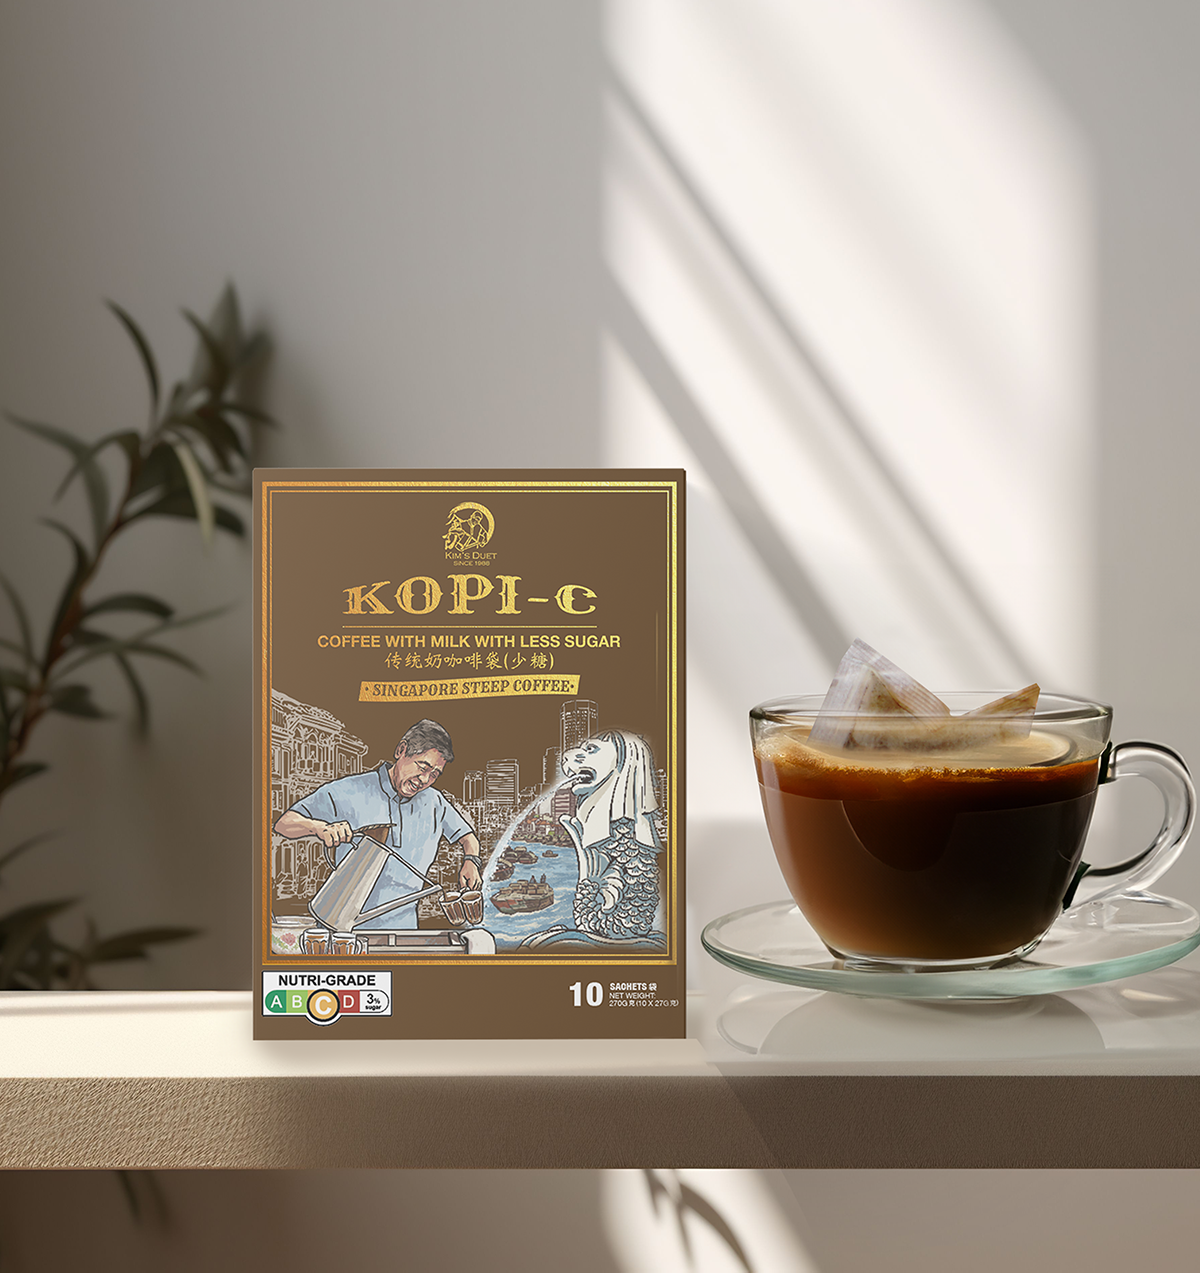 Kopi-C (Box of 10 sachets)